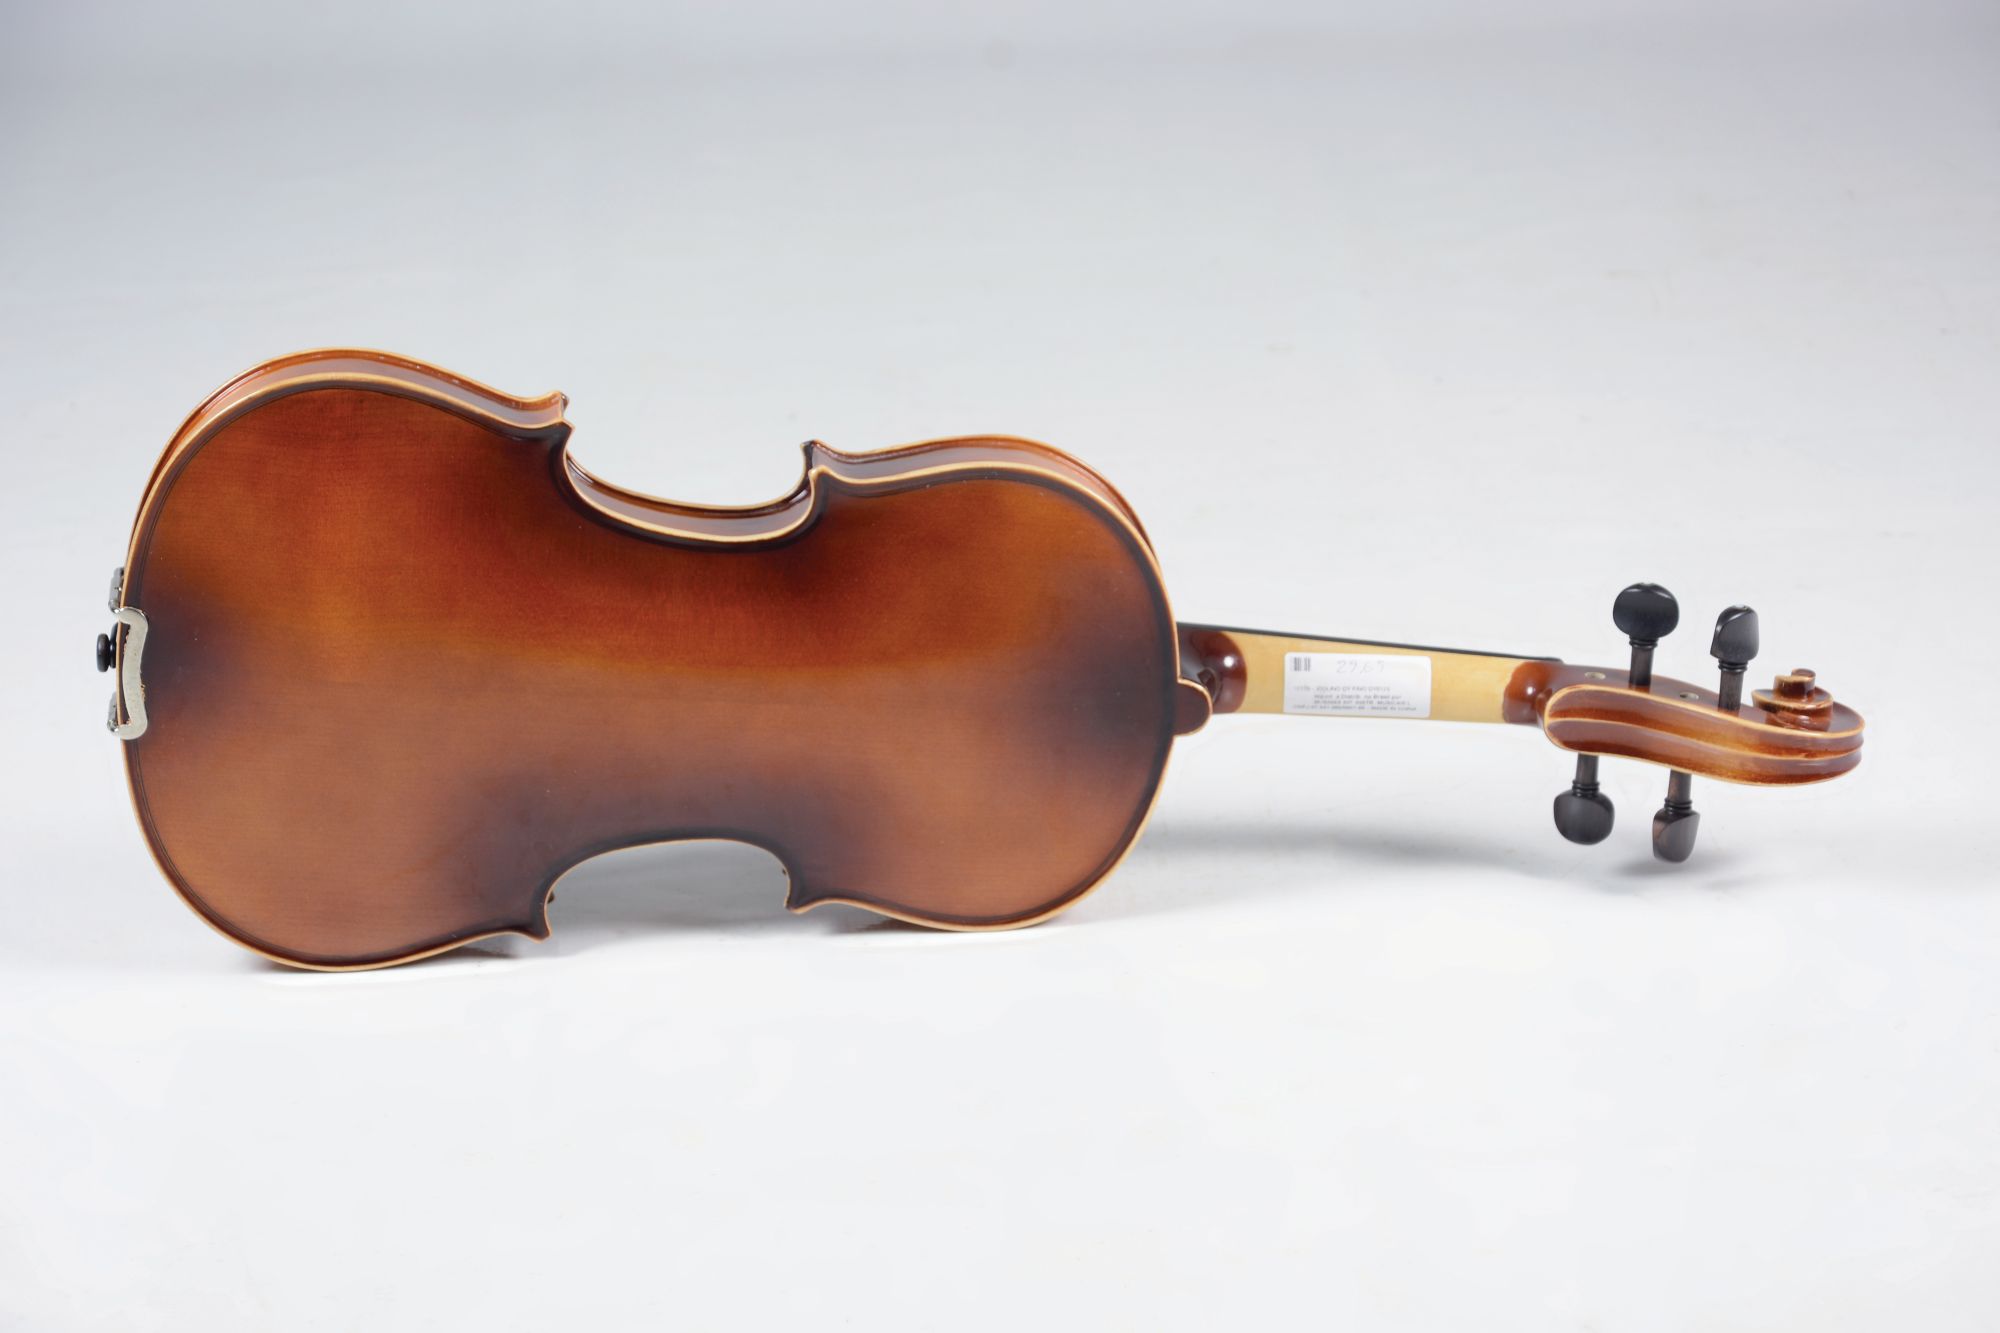 Violino Vivace Be44 Beethoven 4/4